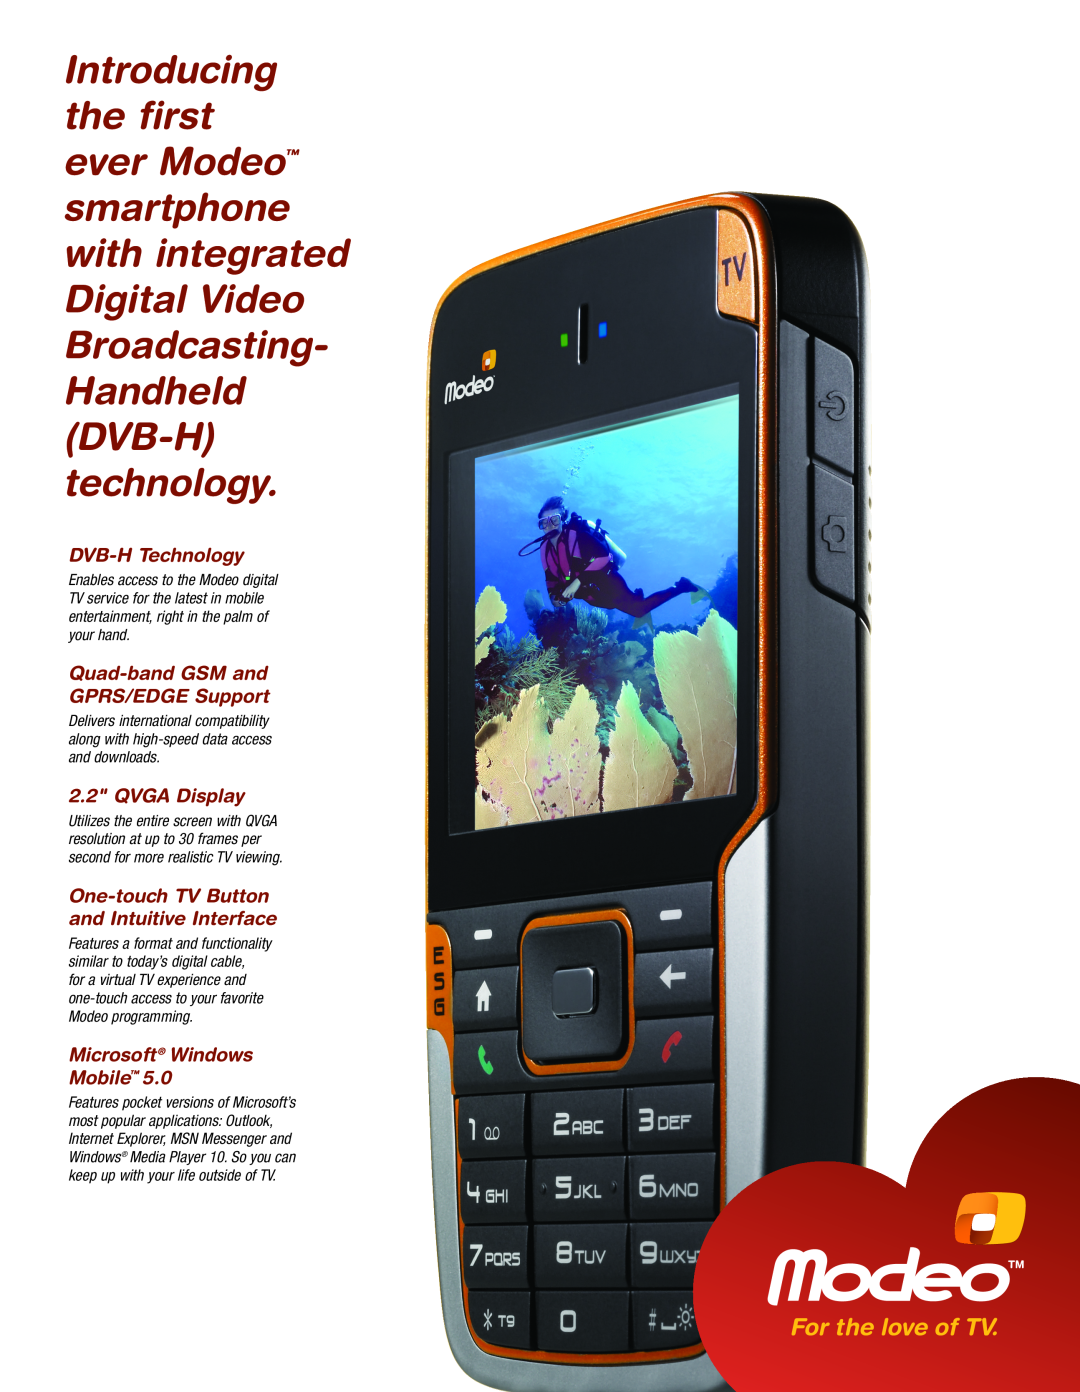 HTC manual DVB-H Technology, Quad-band GSM and GPRS/EDGE Support, QVGA Display, Microsoft Windows Mobile 